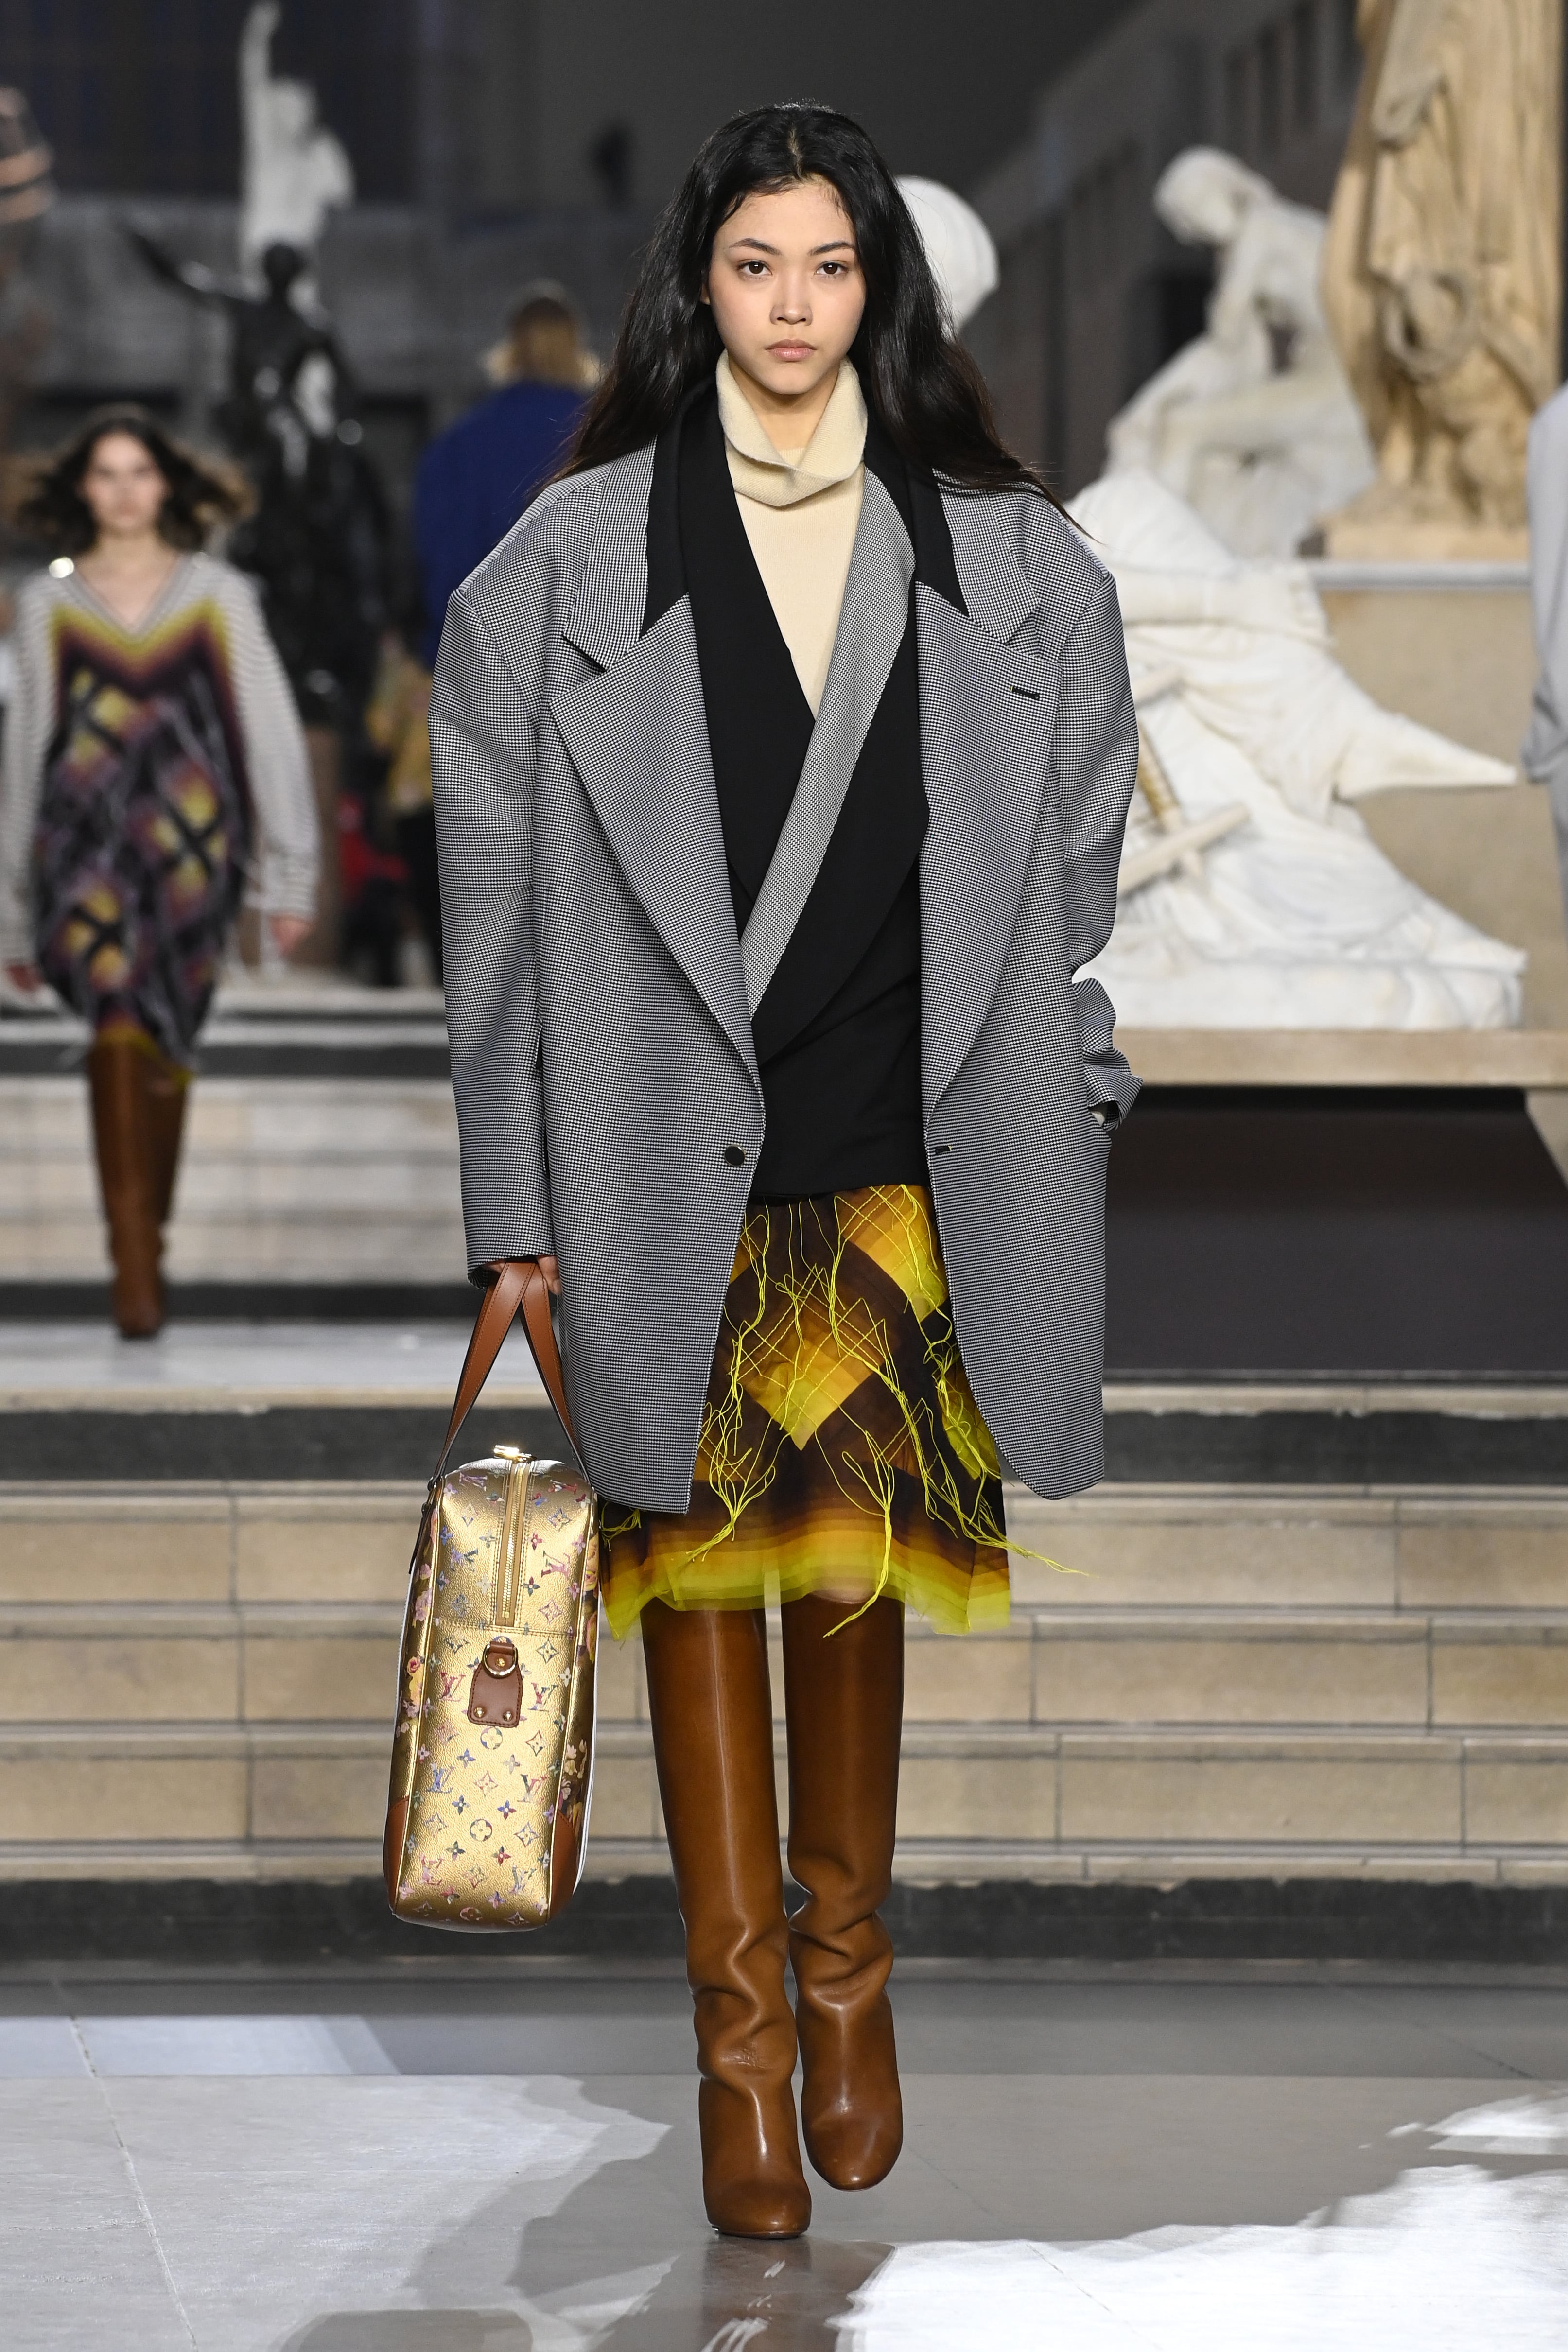 Sophie Turner Sit Front Row At Louis Vuitton Show – Pochta News, Porta-documentos  Louis Vuitton Sabana en lona a cuadros gris y cuero negro, Alicia Vikander